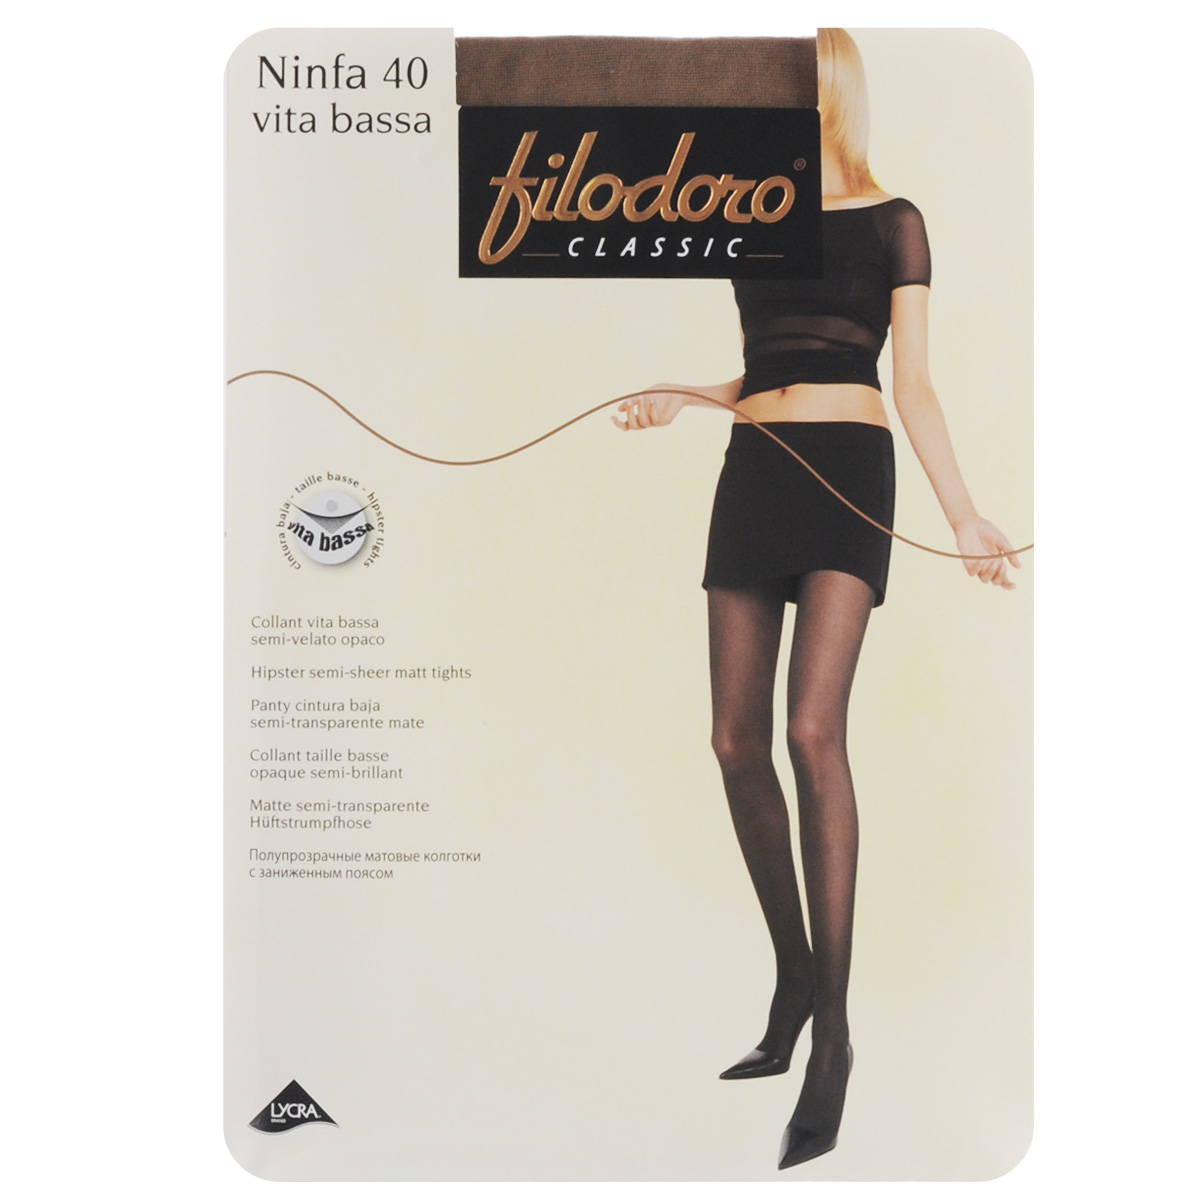 Колготки женские Filodoro Classic Ninfa 40 Vita Bassa, цвет: Glace (коричневый). C115060FC. Размер 2 (S)